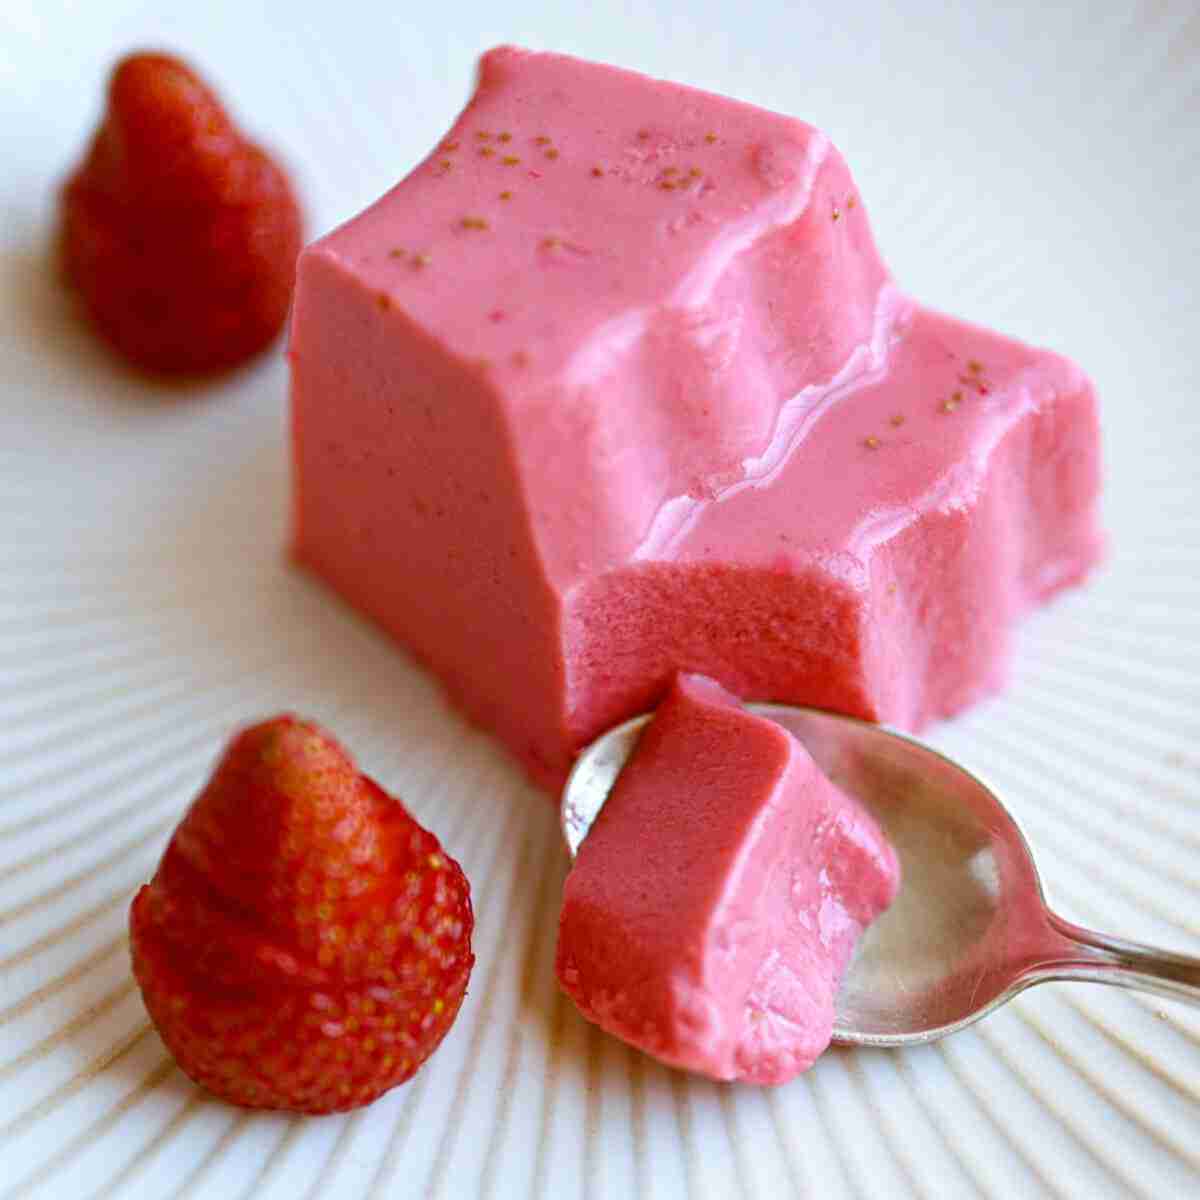 A slice of strawberry milk jello or strawberry milk jelly with 2 strawberries next to it.